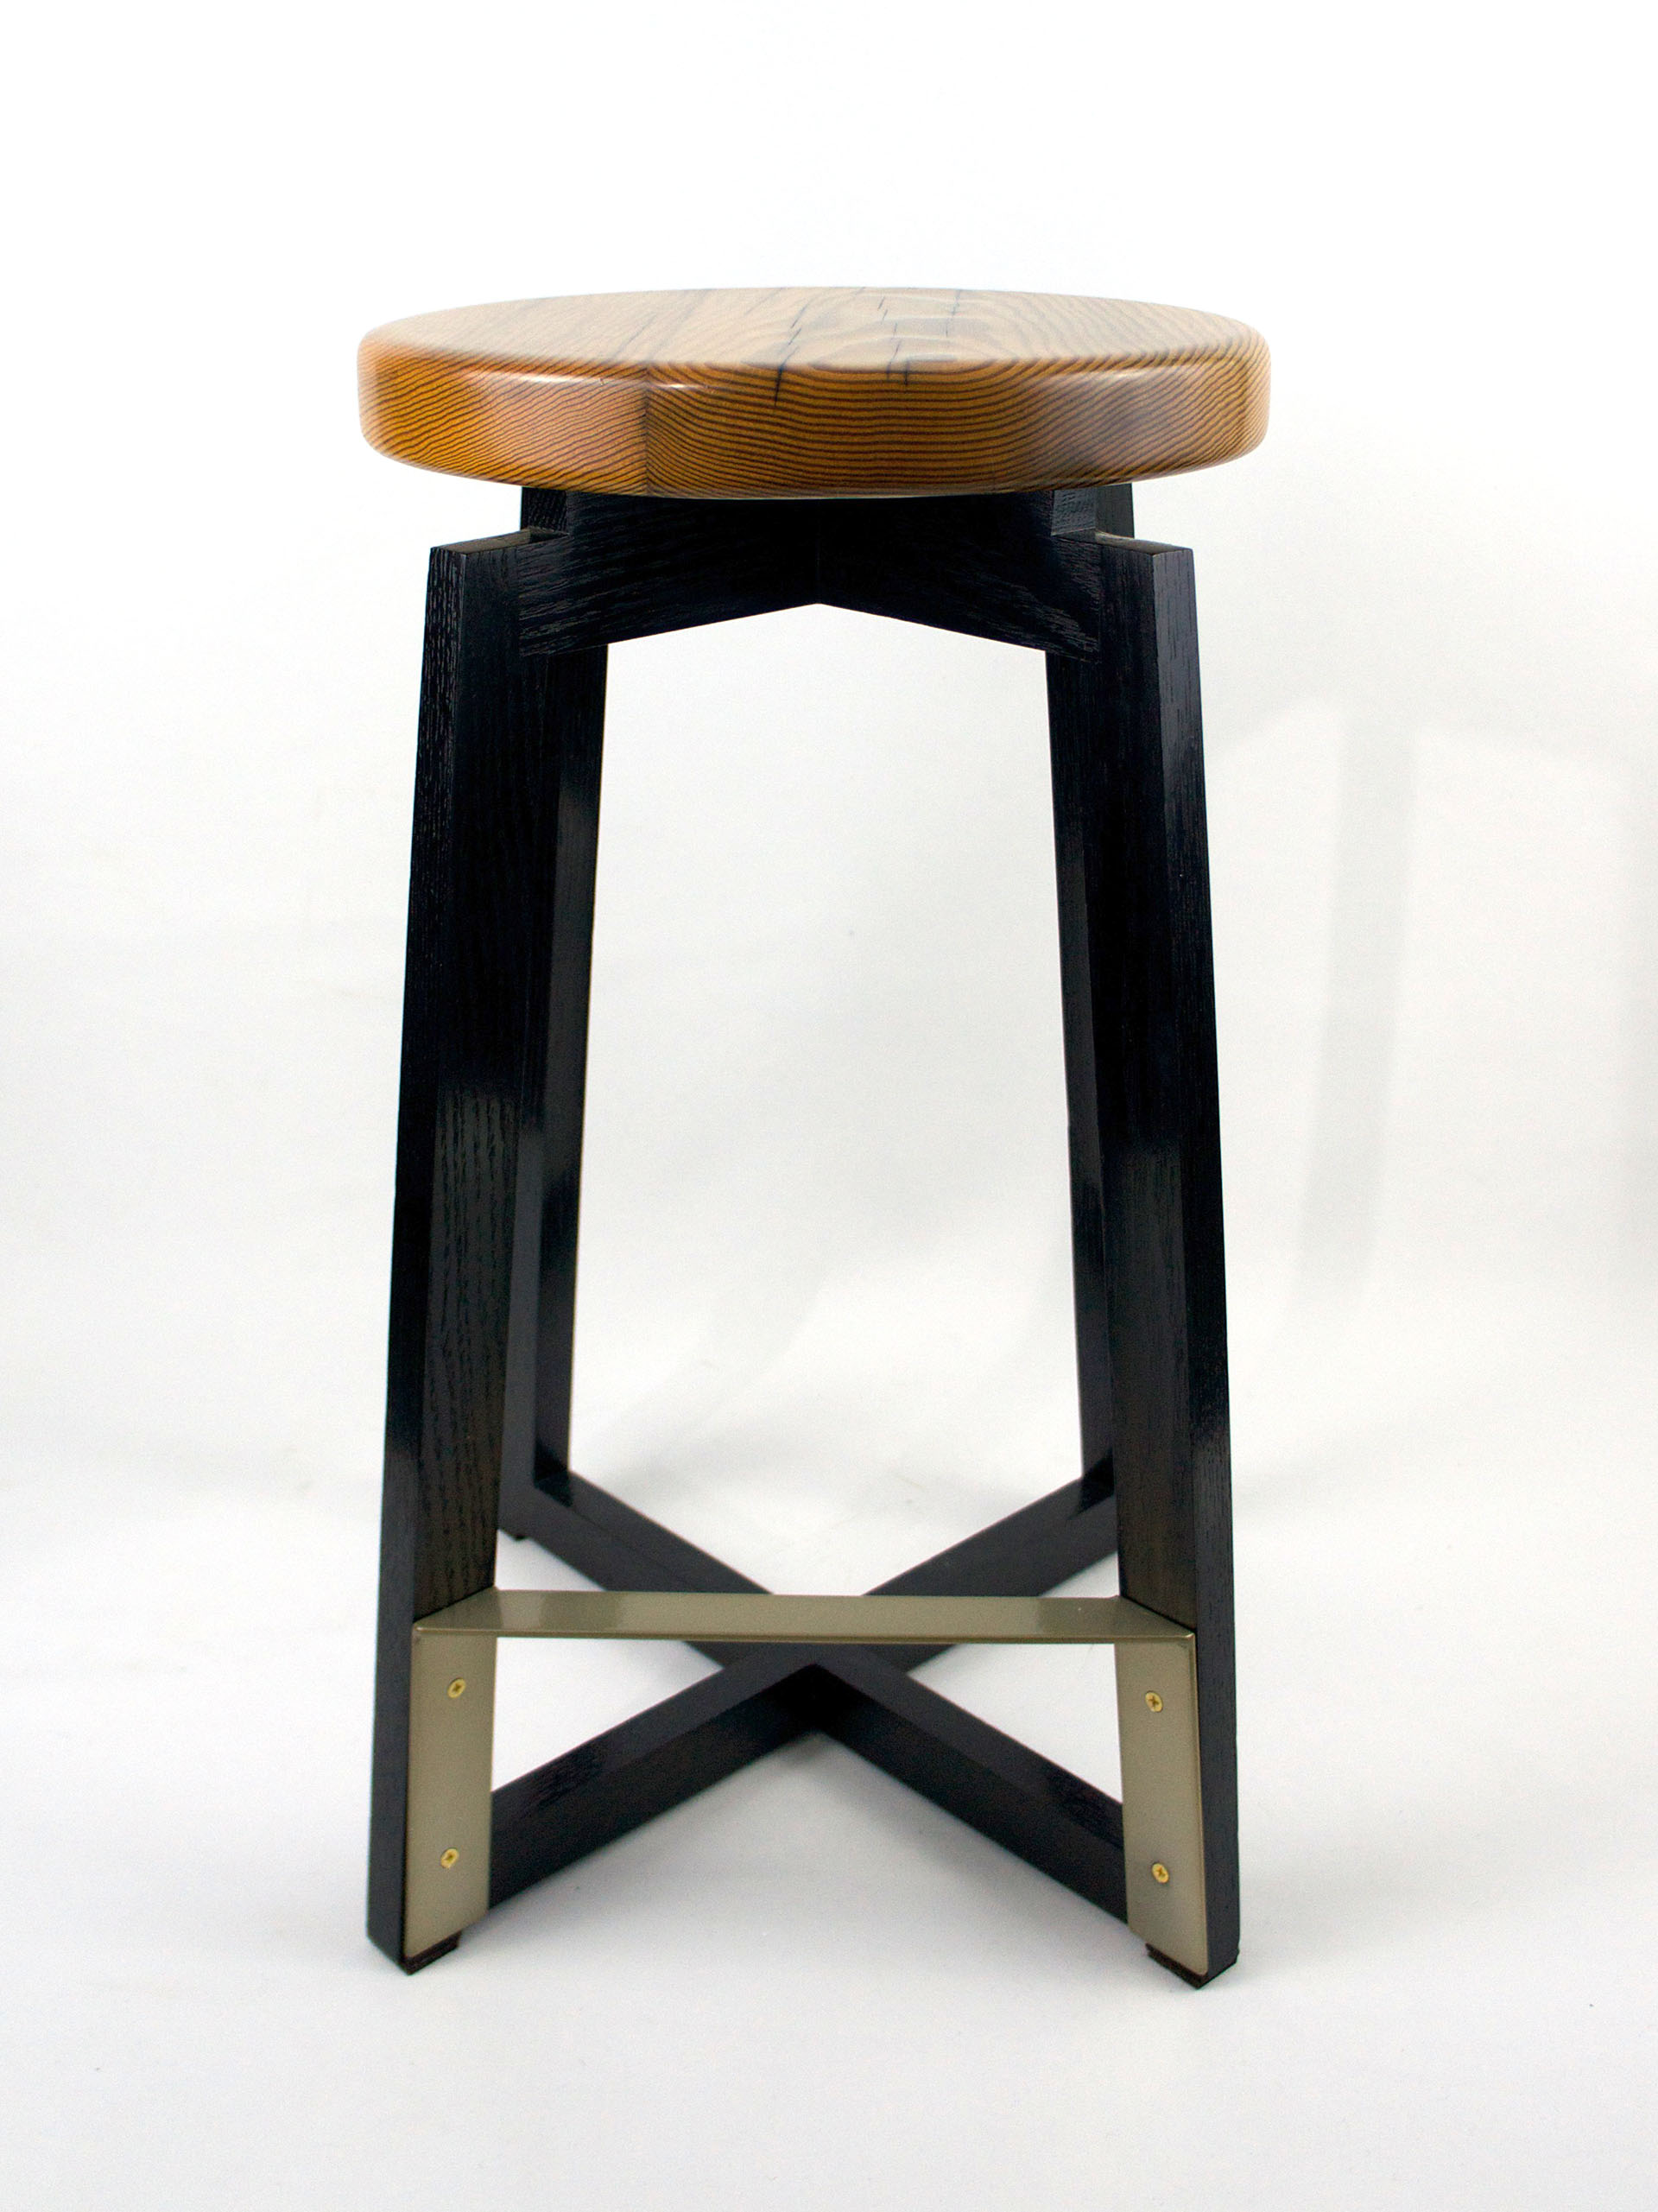 Picke wood stool 1.jpg